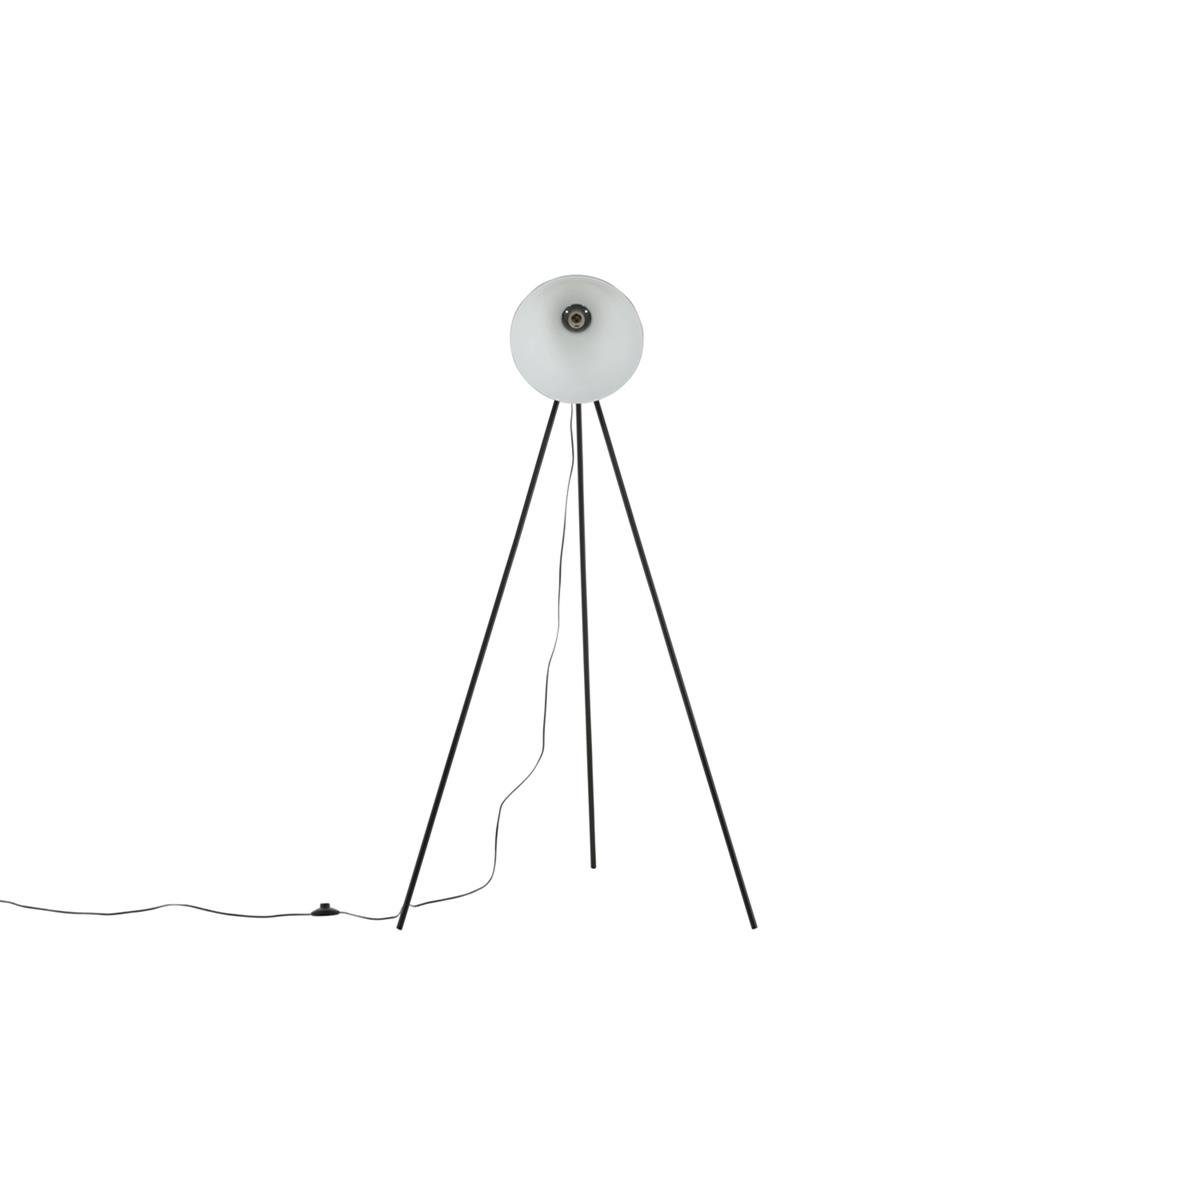 Design - Stehlampe Stehlampe TIV Industrial cm 140 - Lampe hoch BOURGH